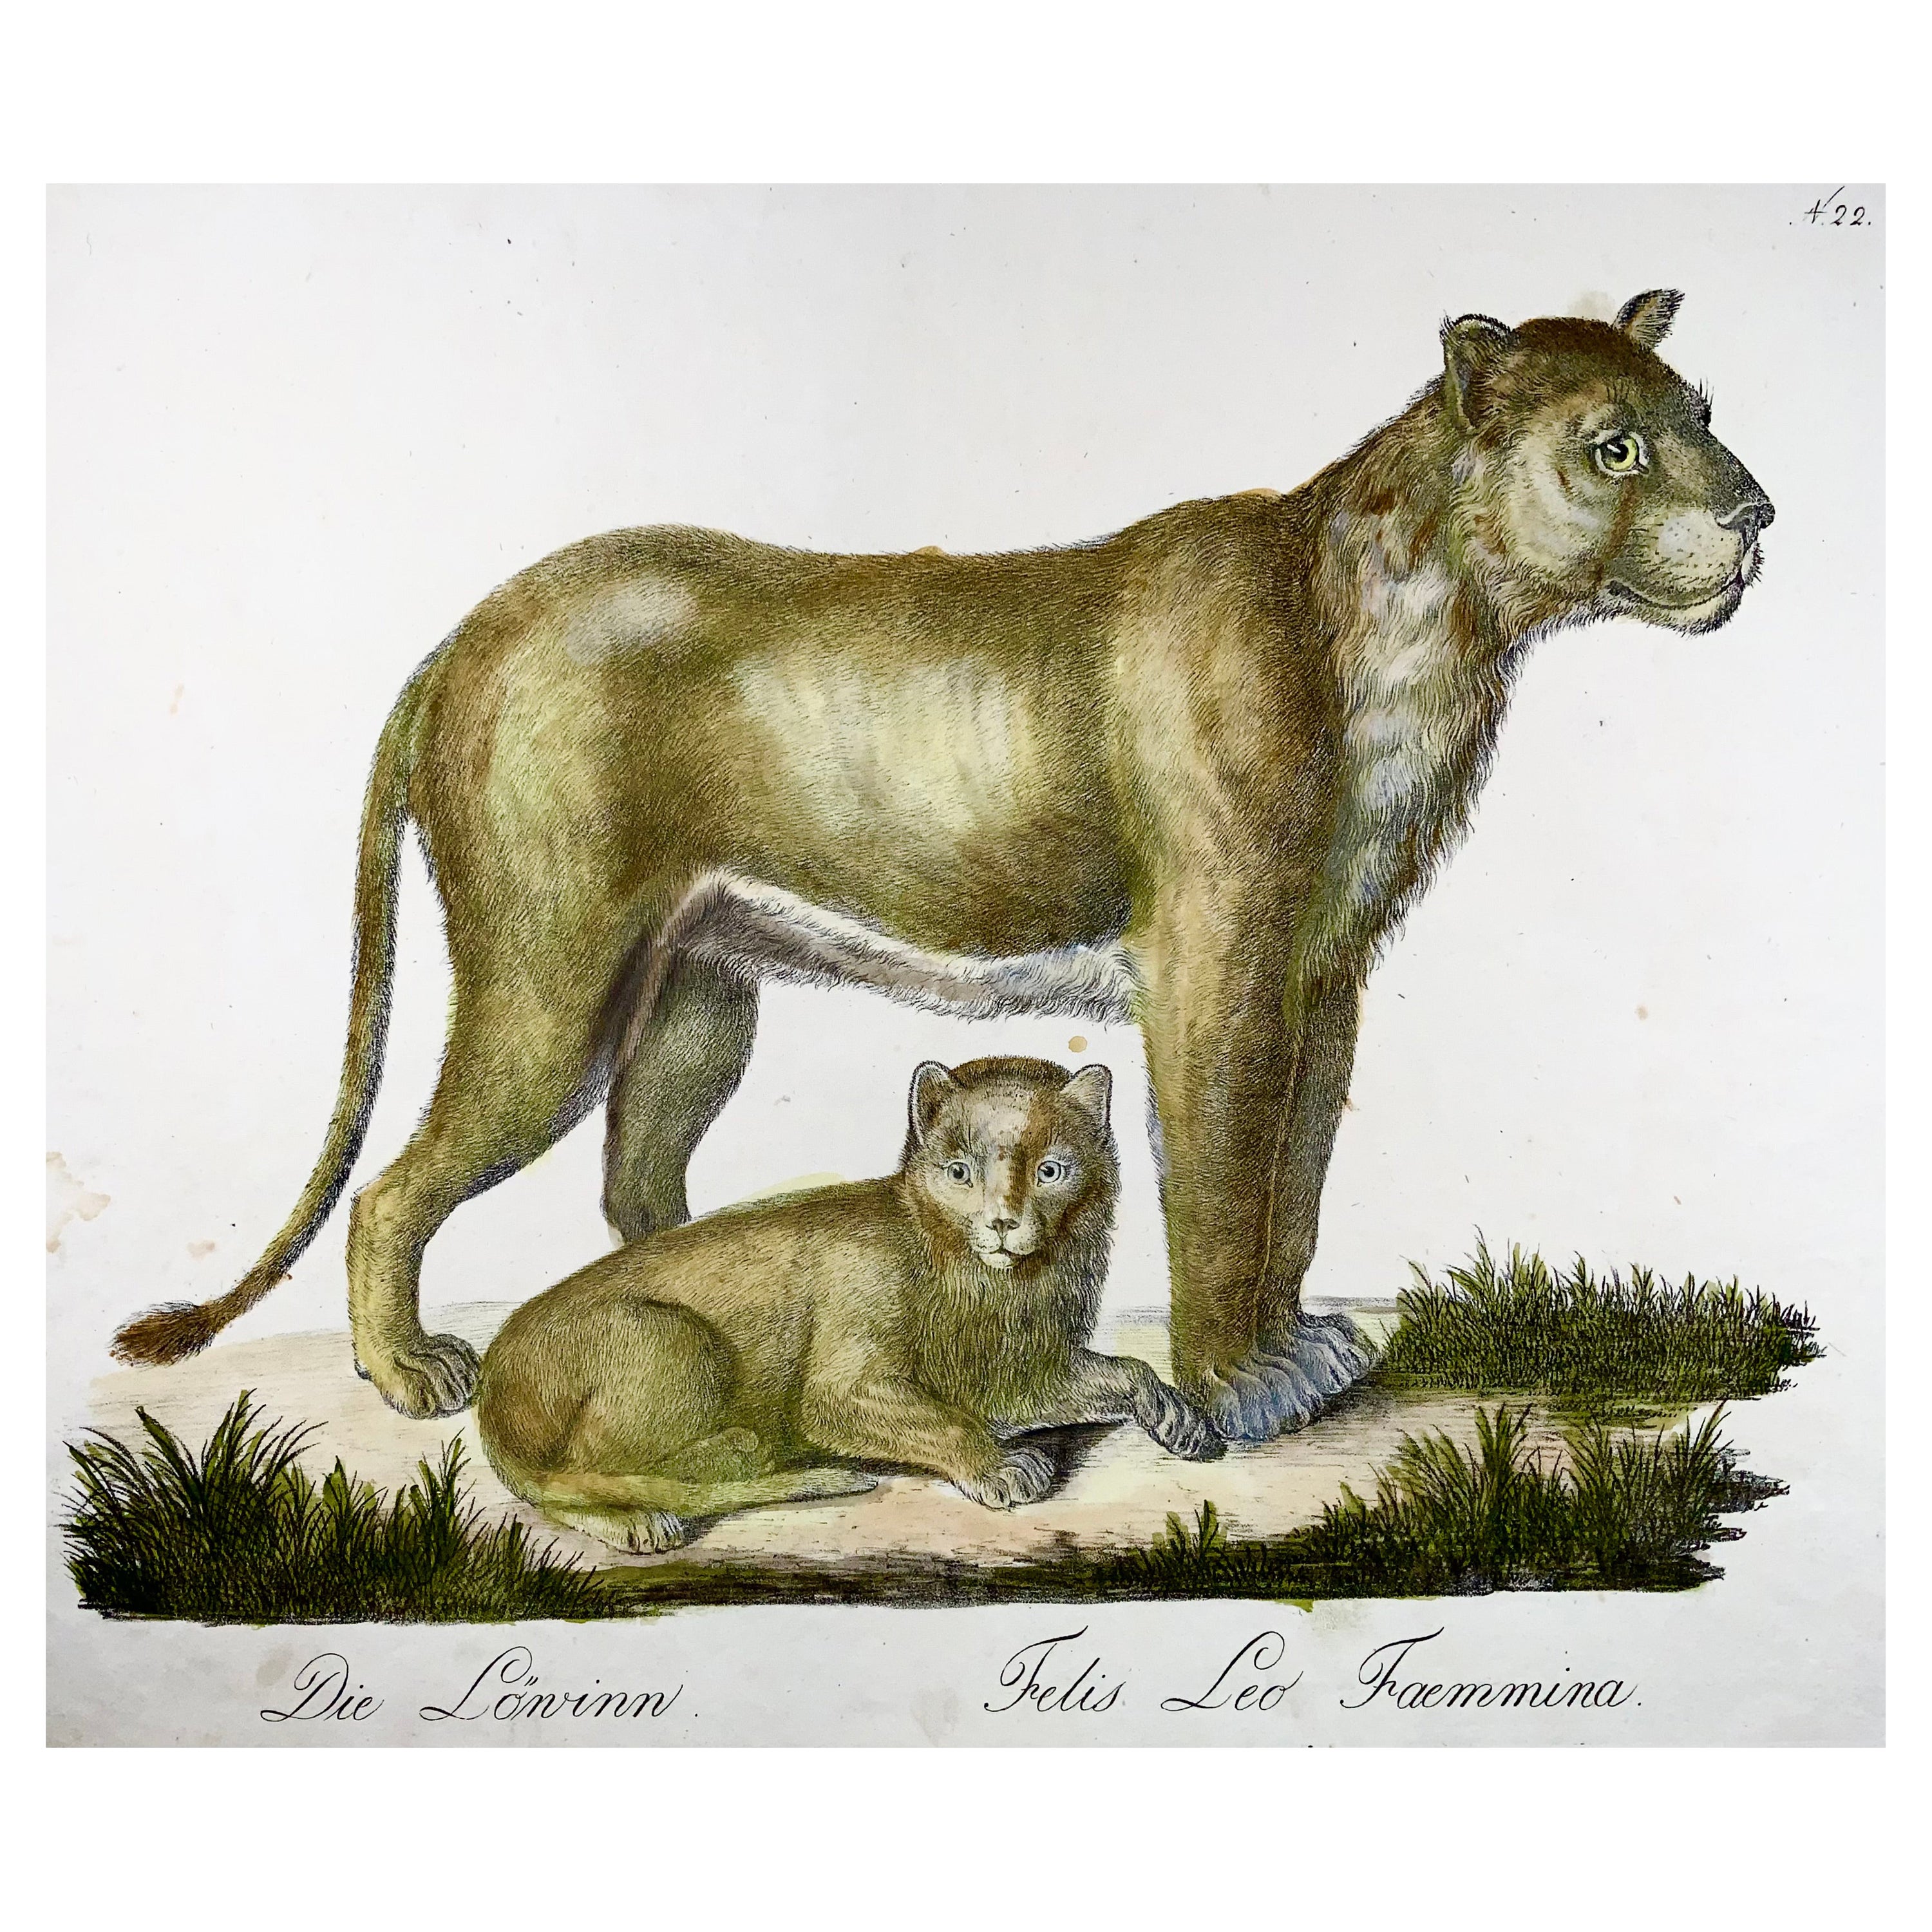 1816 Löwe, Brodtmann, Imp. Folie 42,5 cm, Incunabula der Lithografie